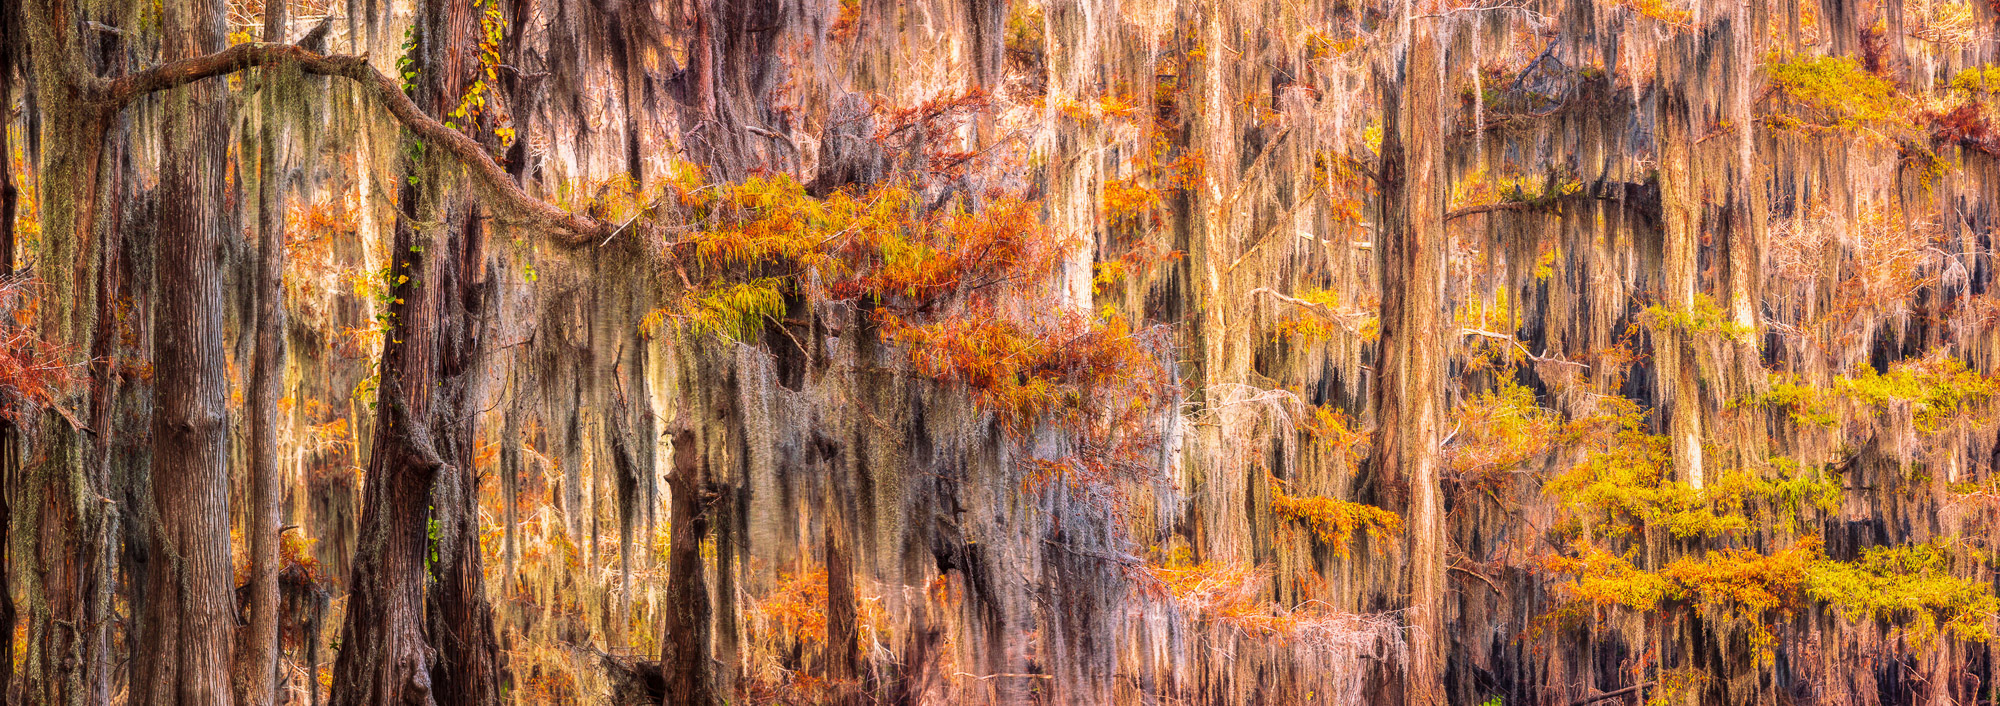 Caddo Lake, Fall, Cypress Trees, Landscape Photography